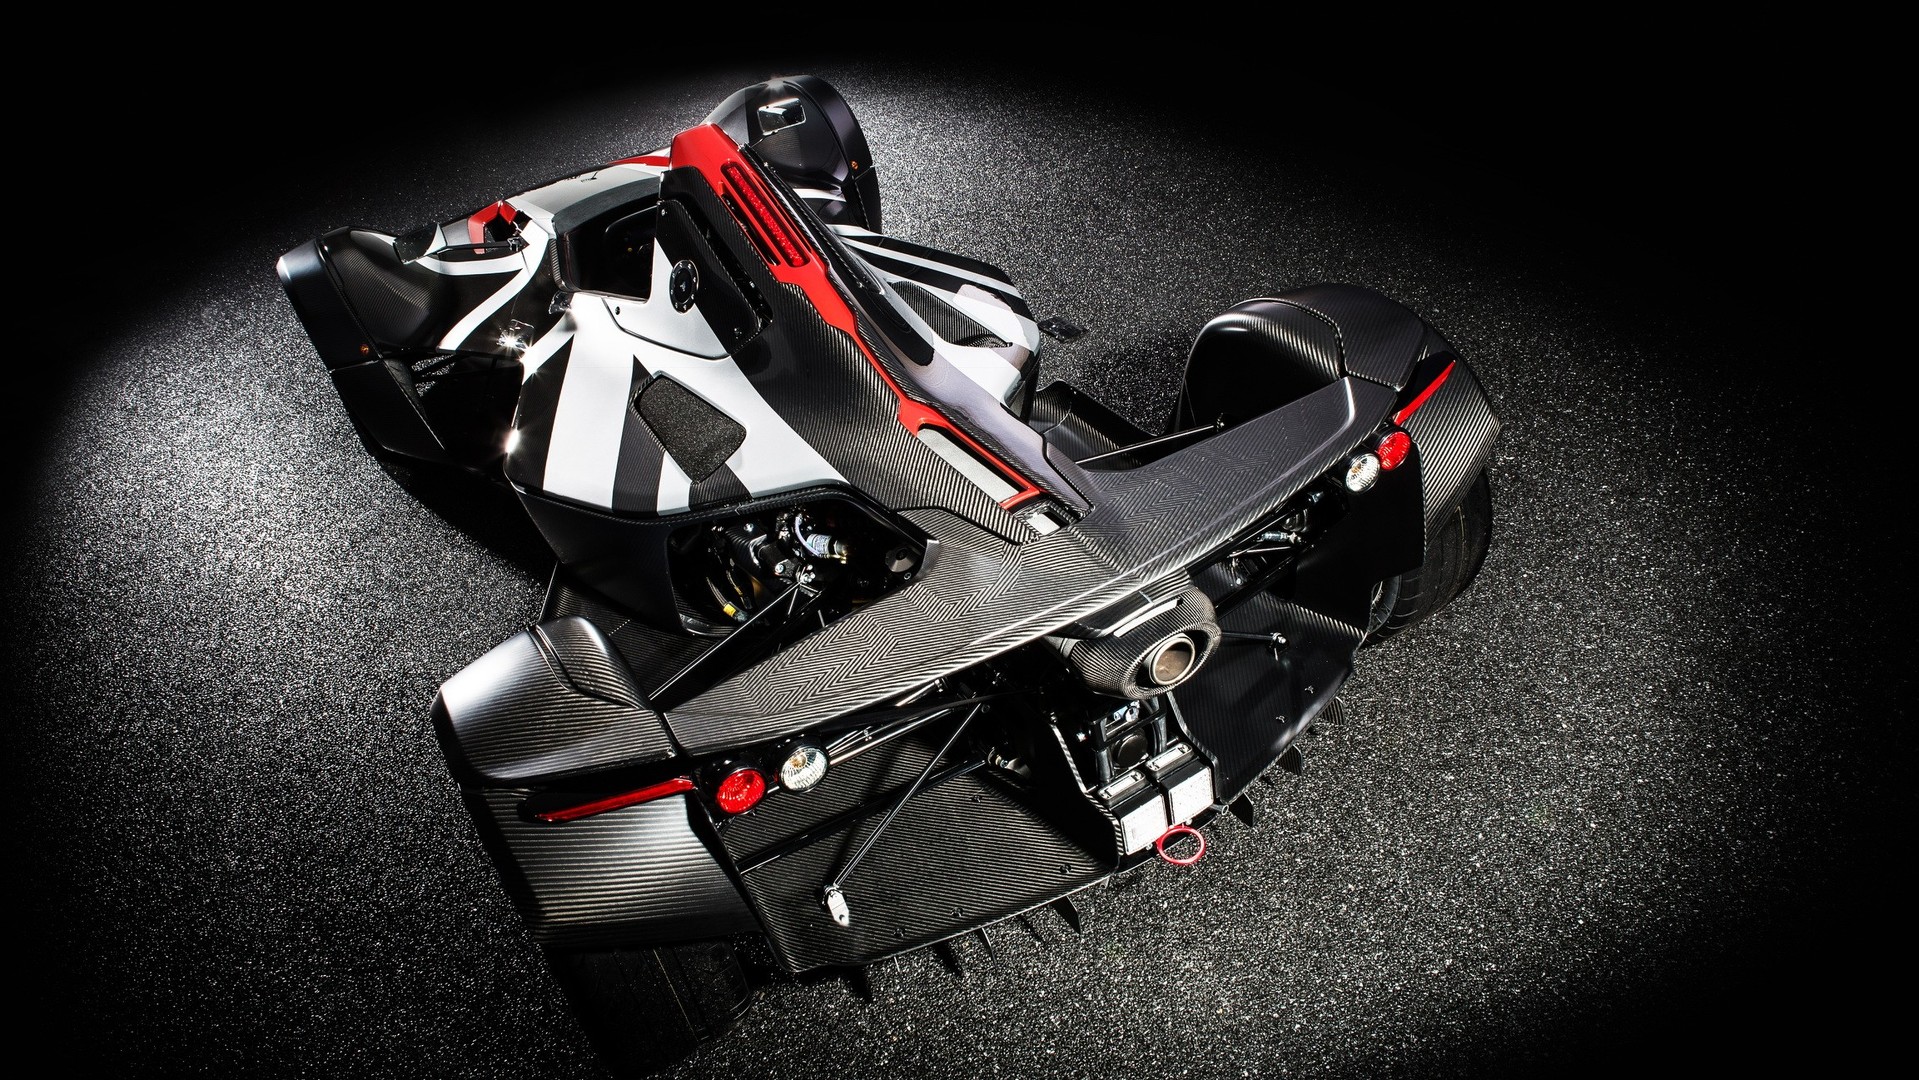 BAC develops graphene panels for Mono sports car